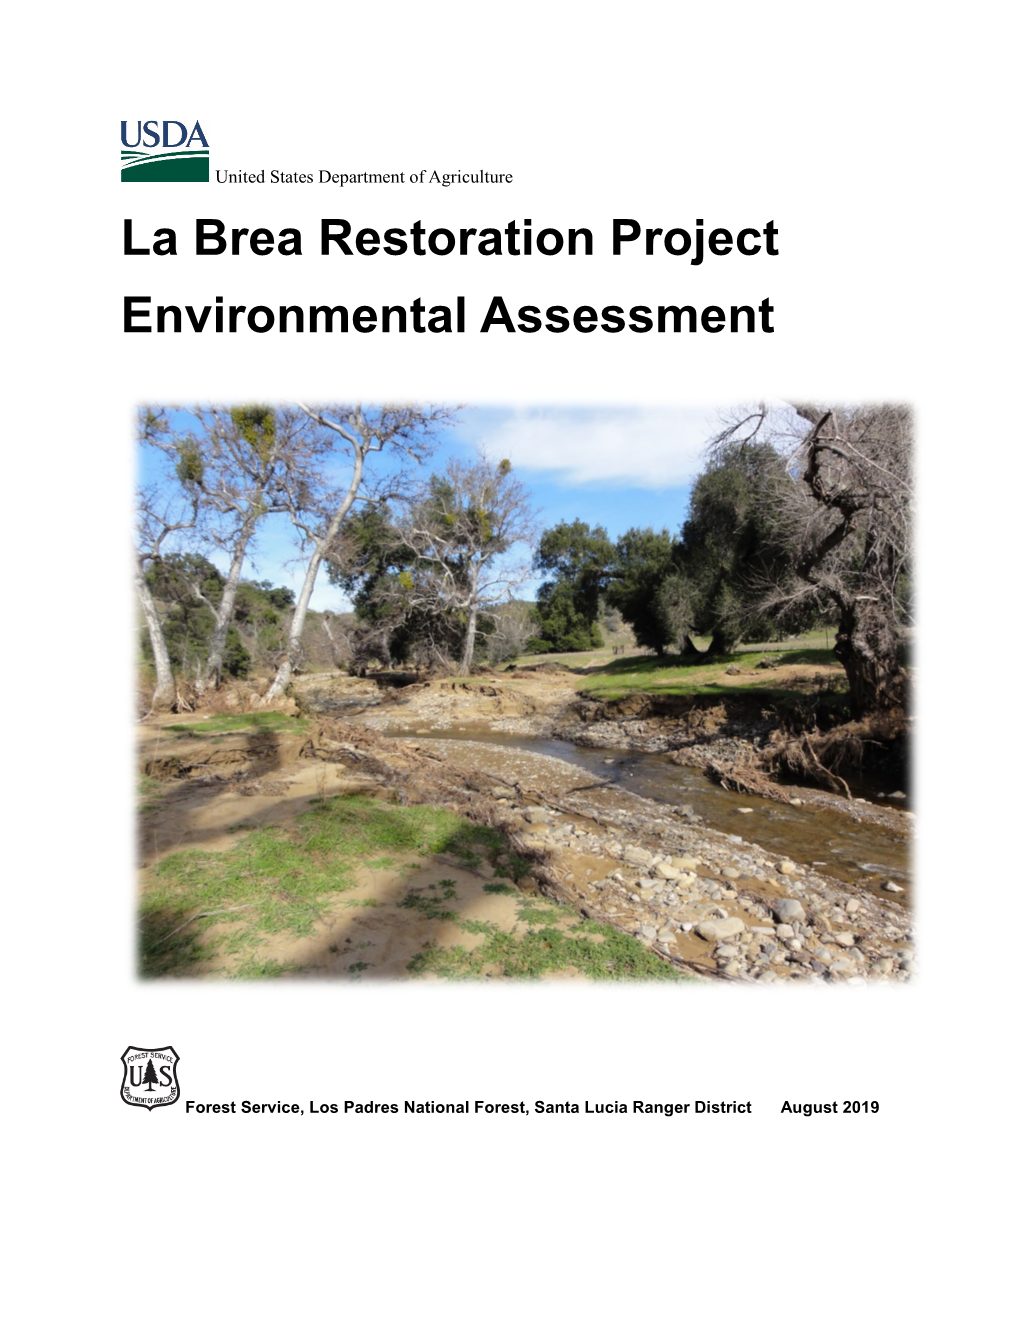 La Brea Restoration Project Environmental Assessment